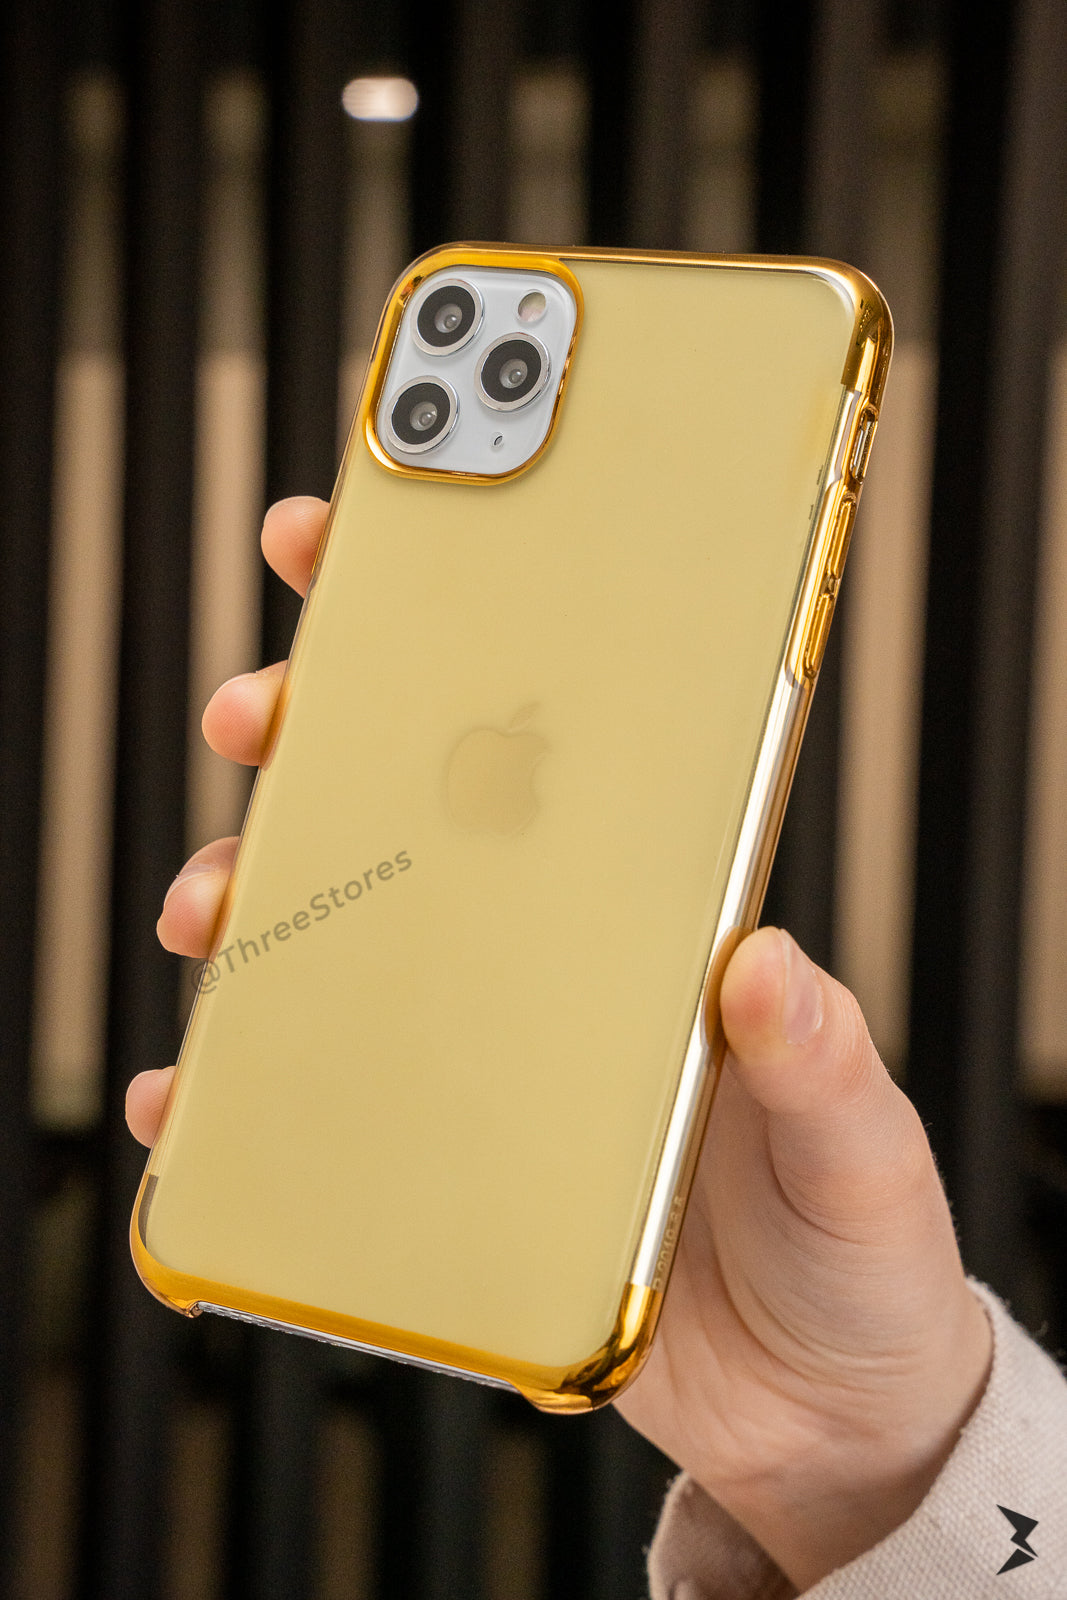 Colored Transparent TPU Case iPhone 11 Pro Max